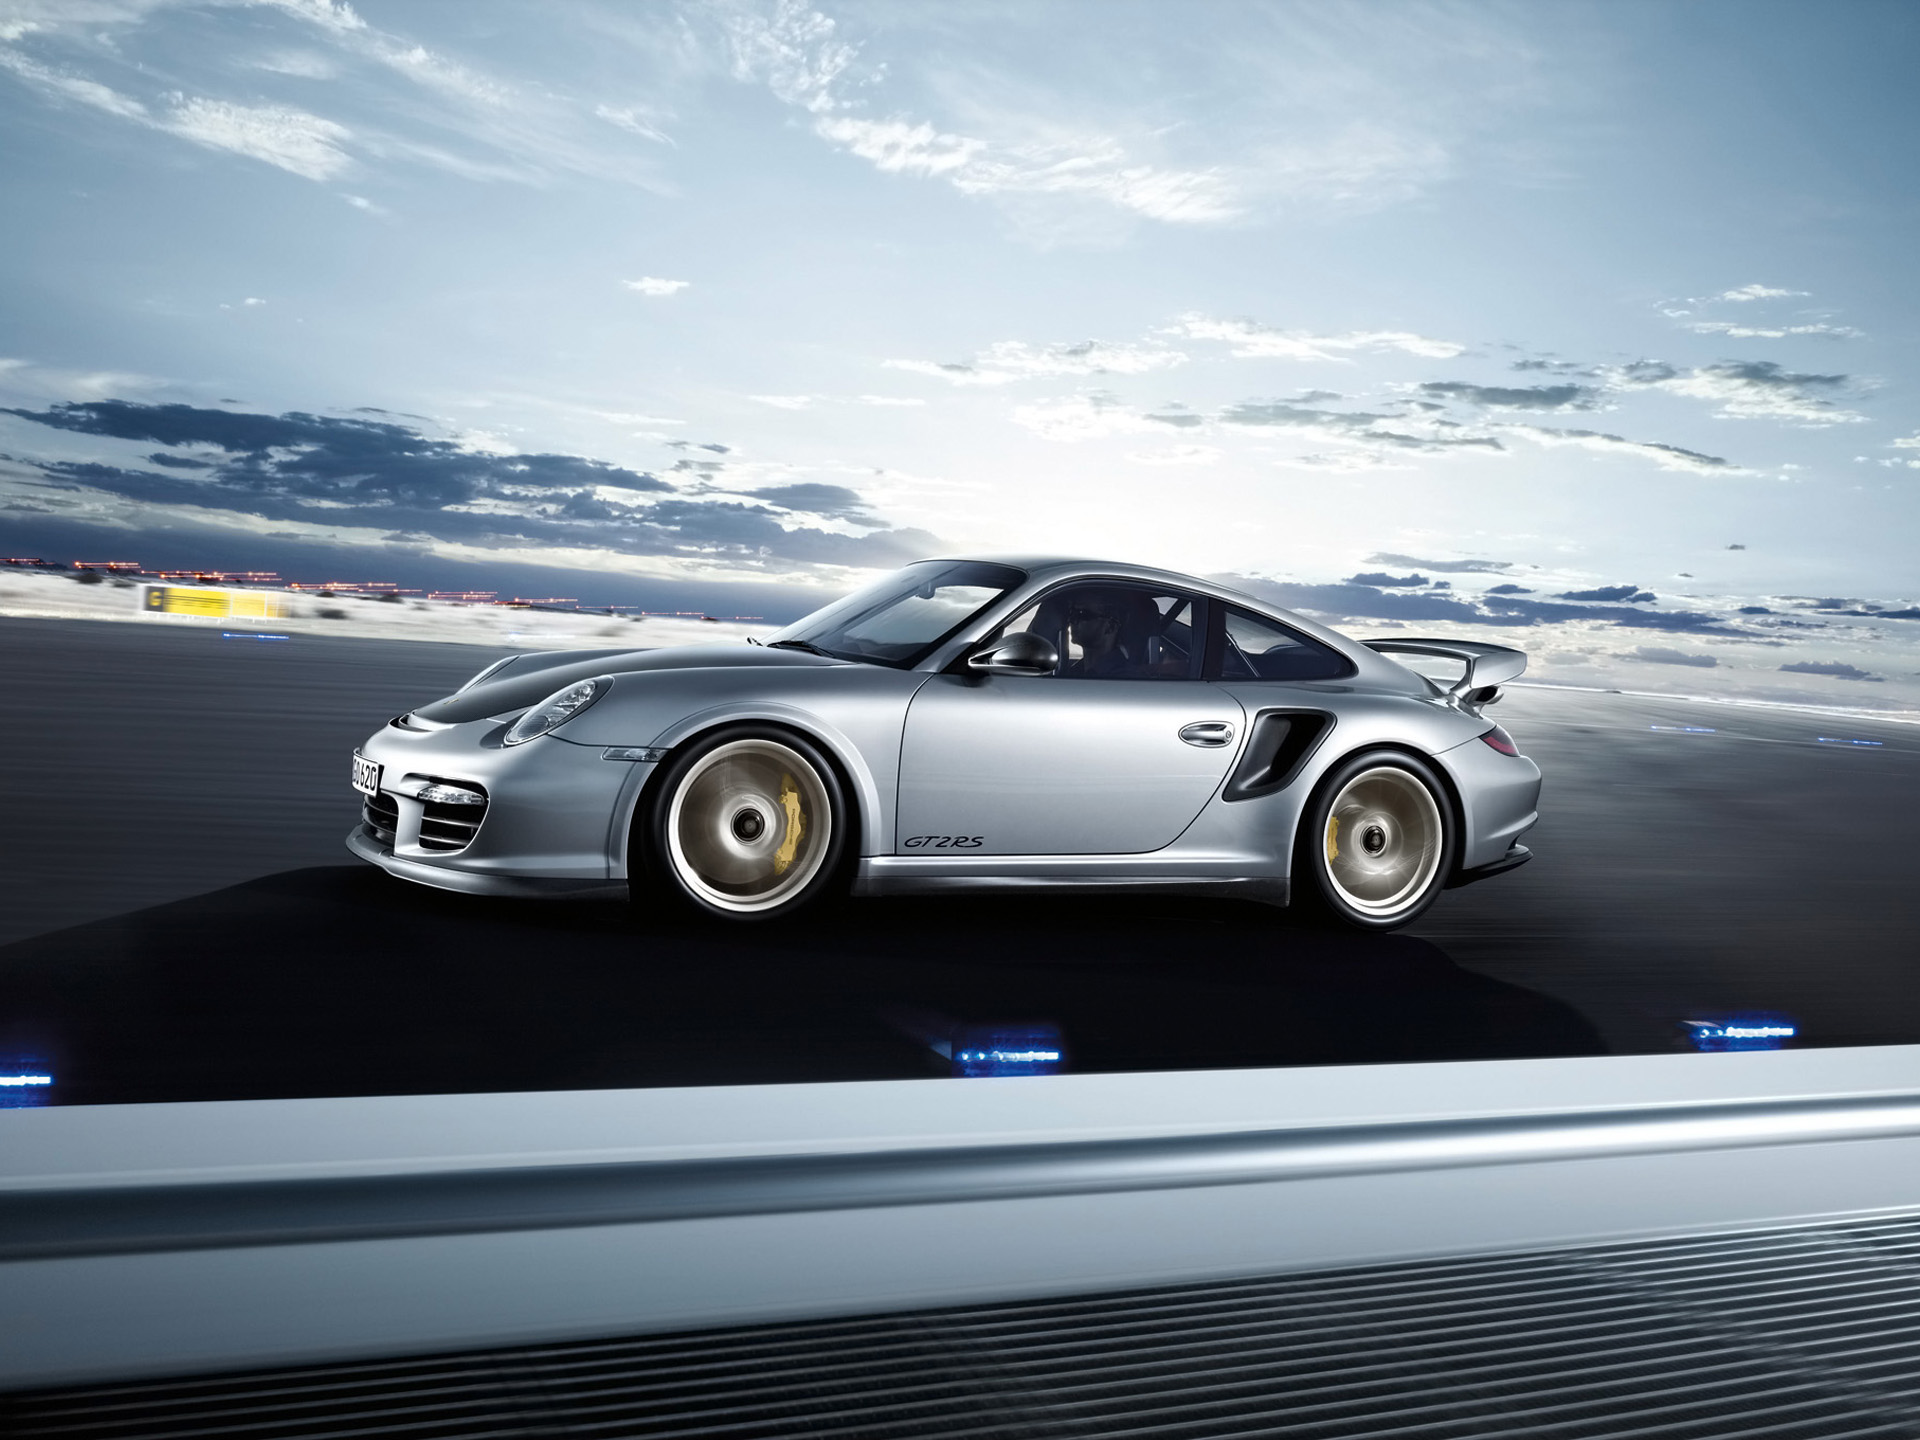 Porsche Of The Day: 2011 Porsche 911 (997) GT2 RS